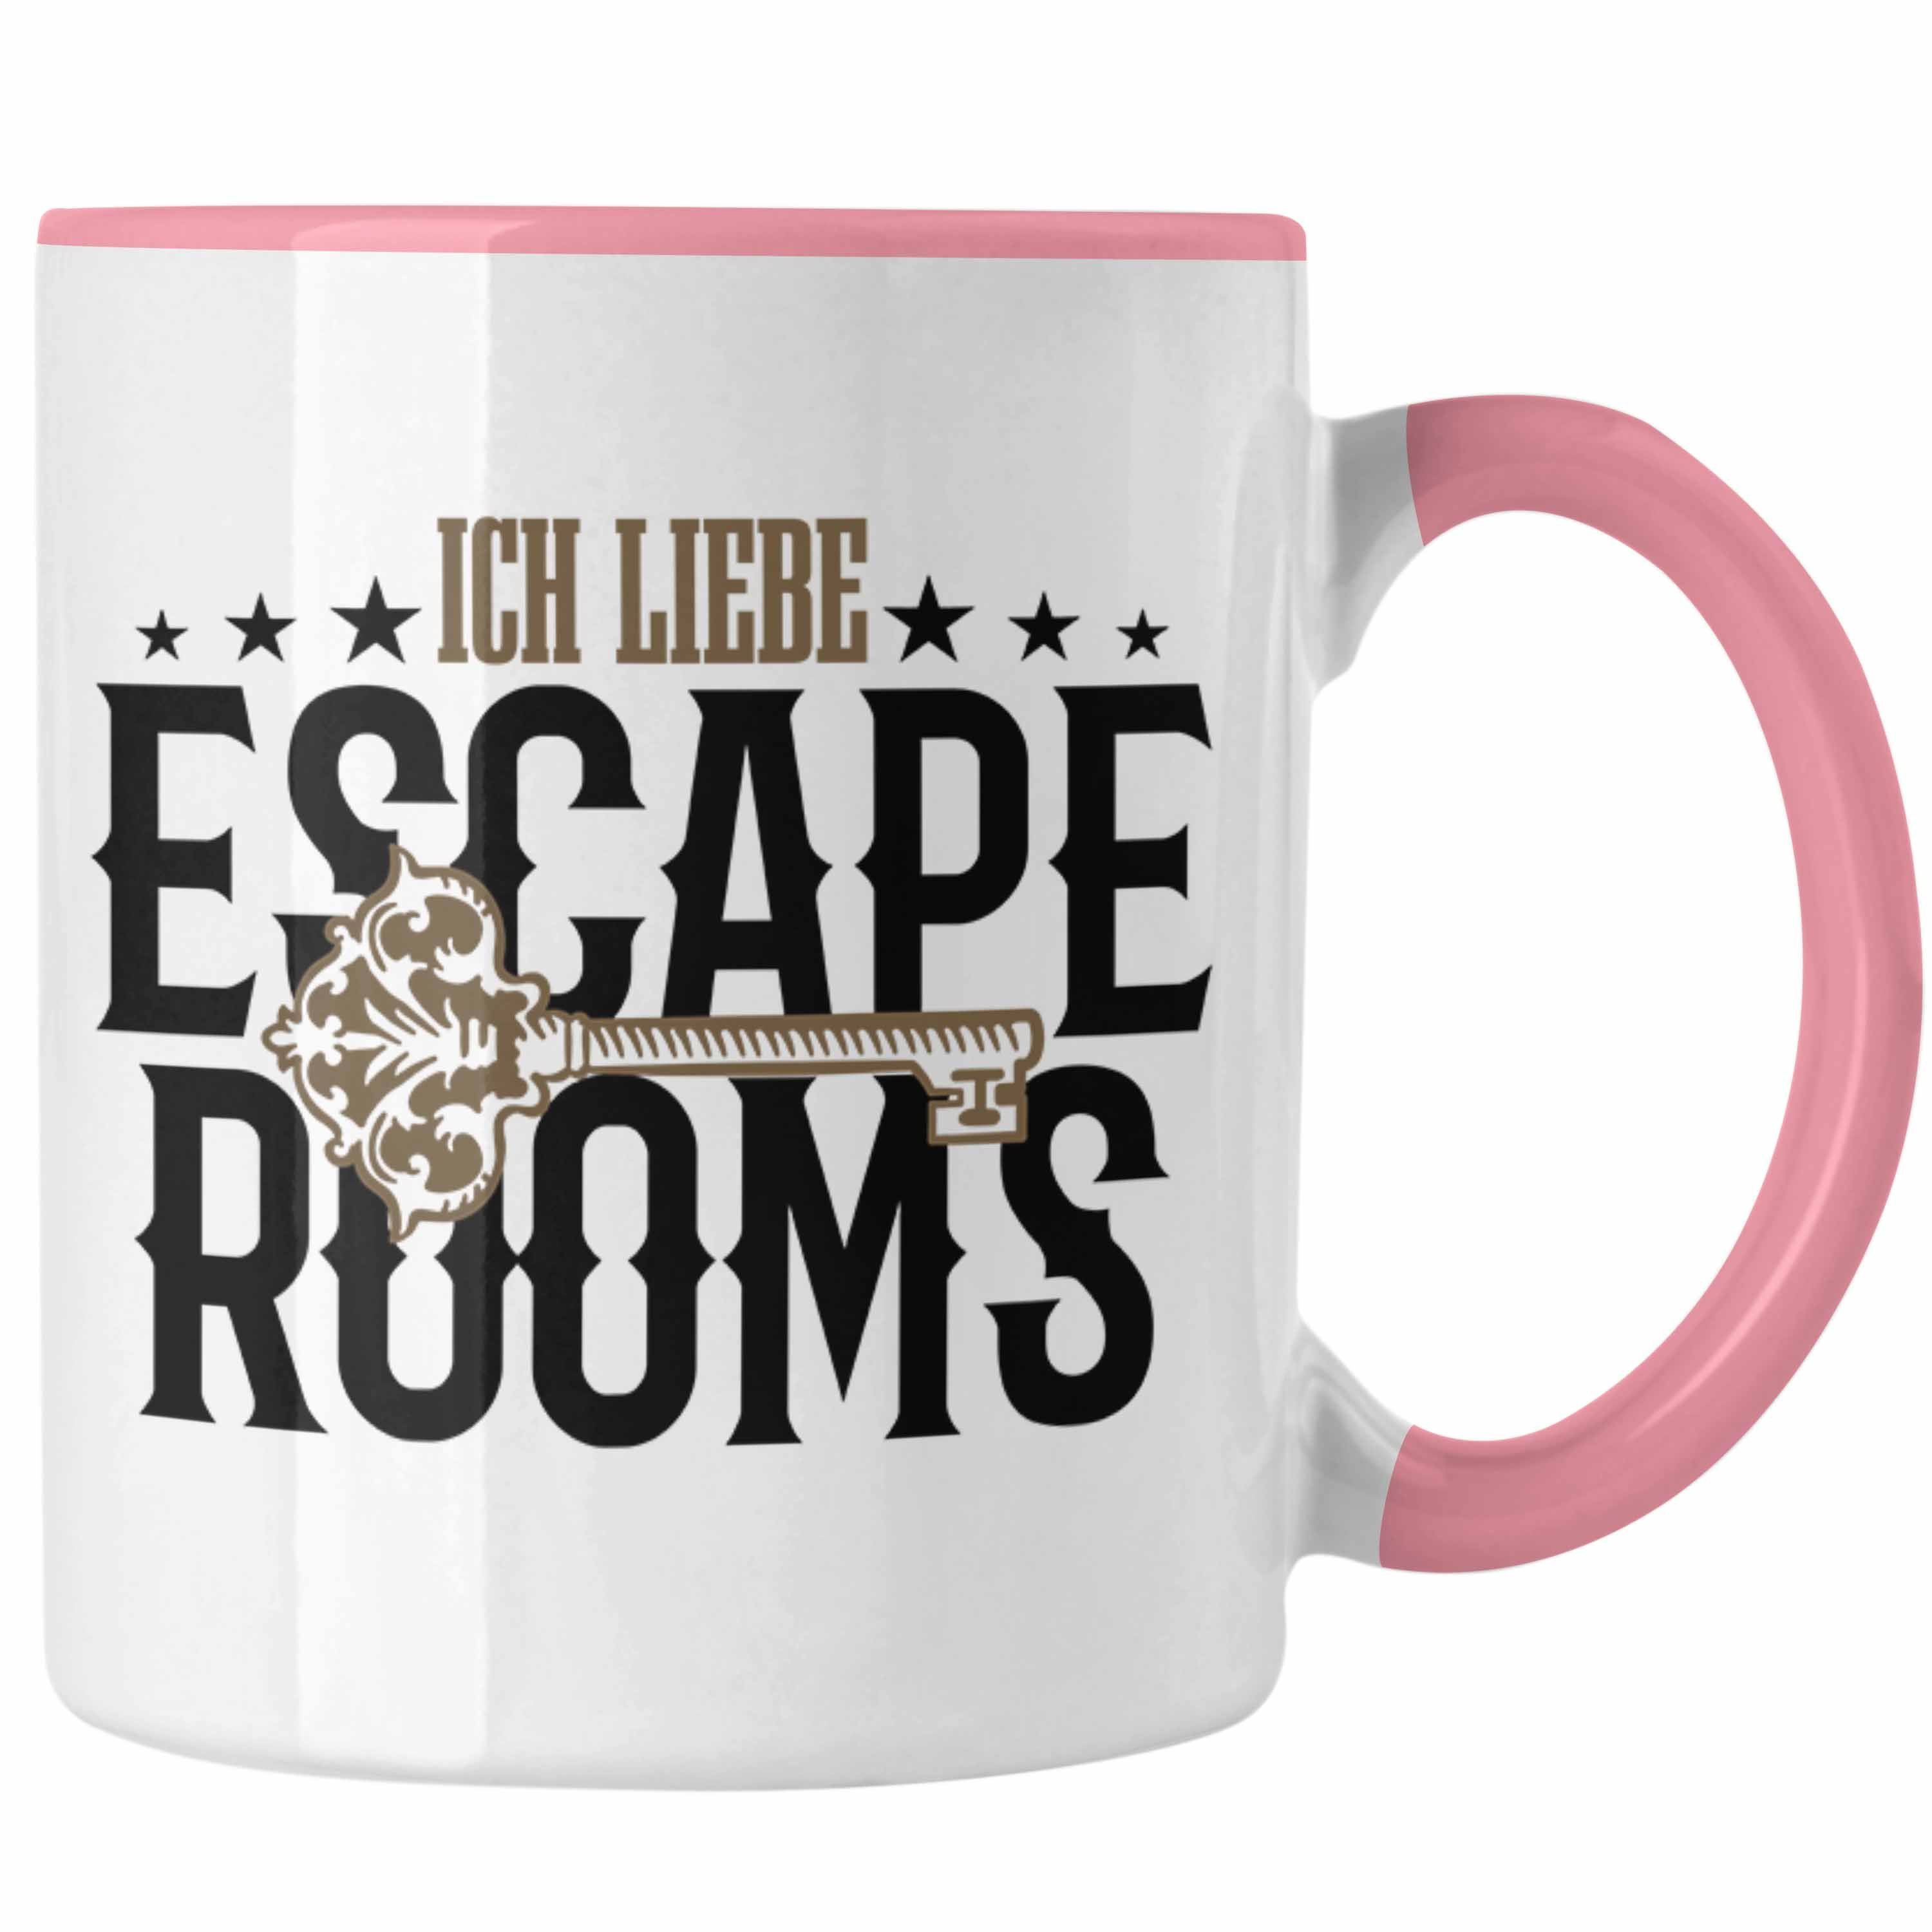 Trendation Tasse Escape Room Lustige Tasse Escape Room Fans Geschenkidee Rosa